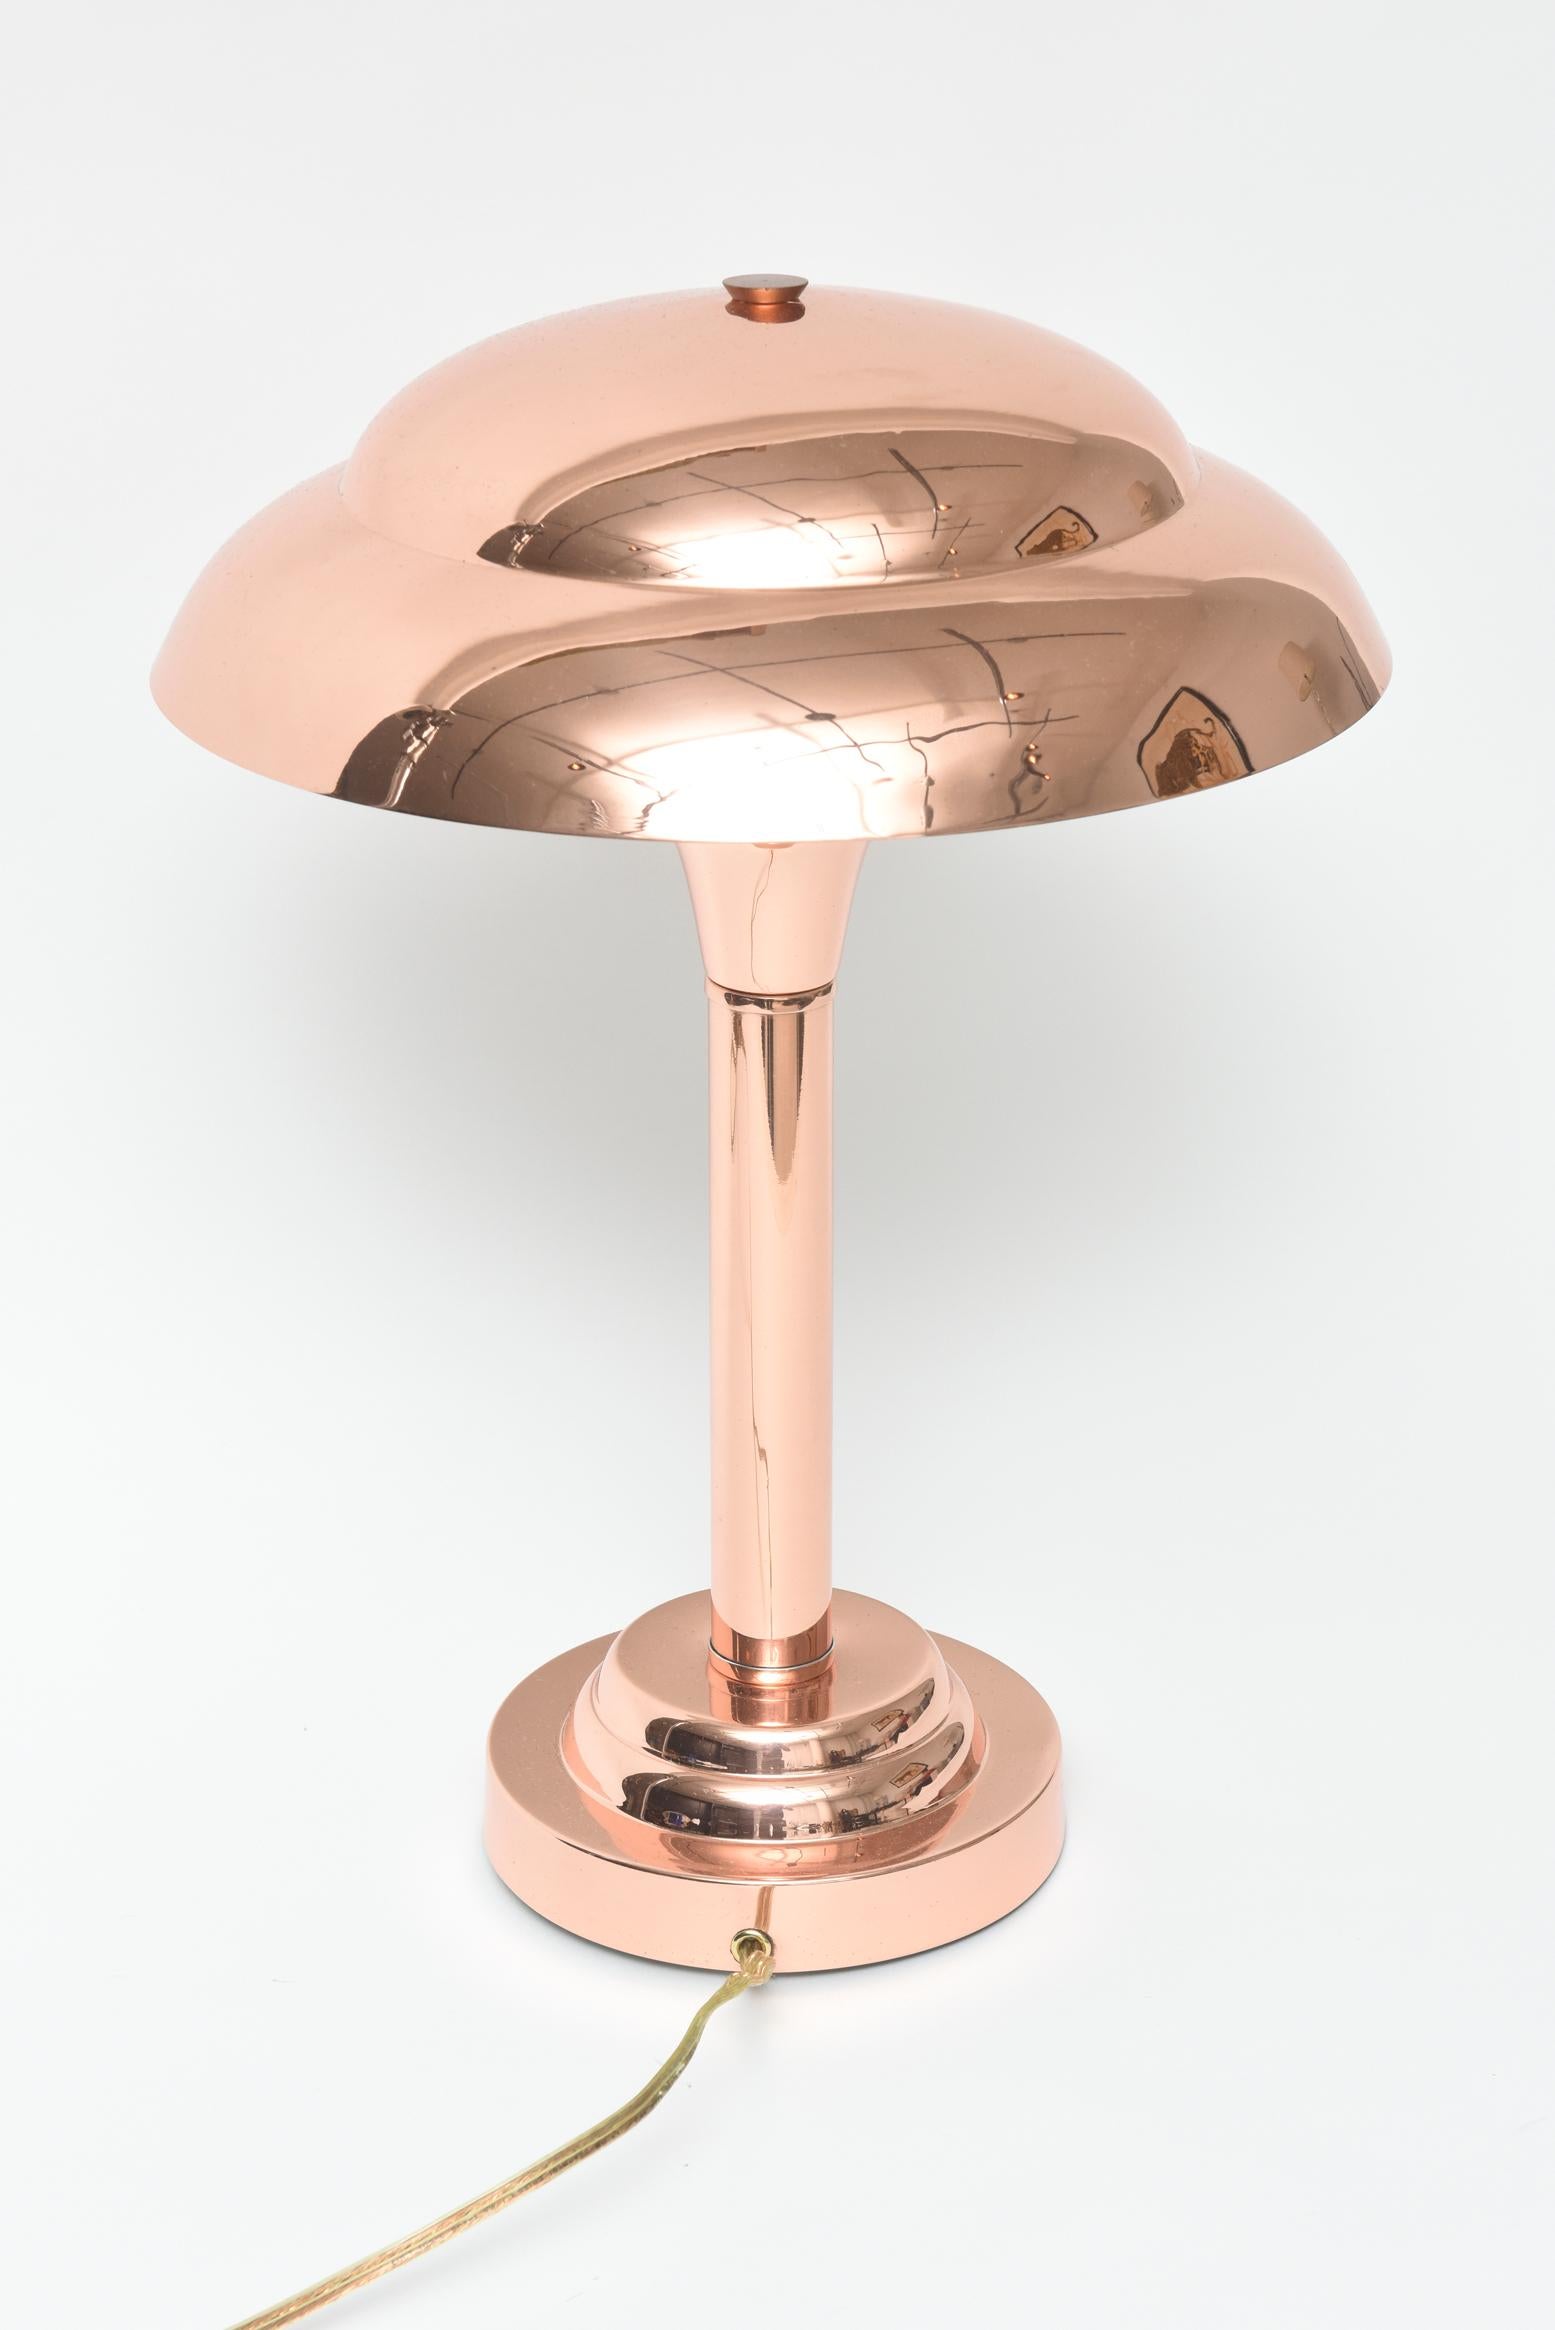 20th Century French Art Deco Copper Table Desk Lamp